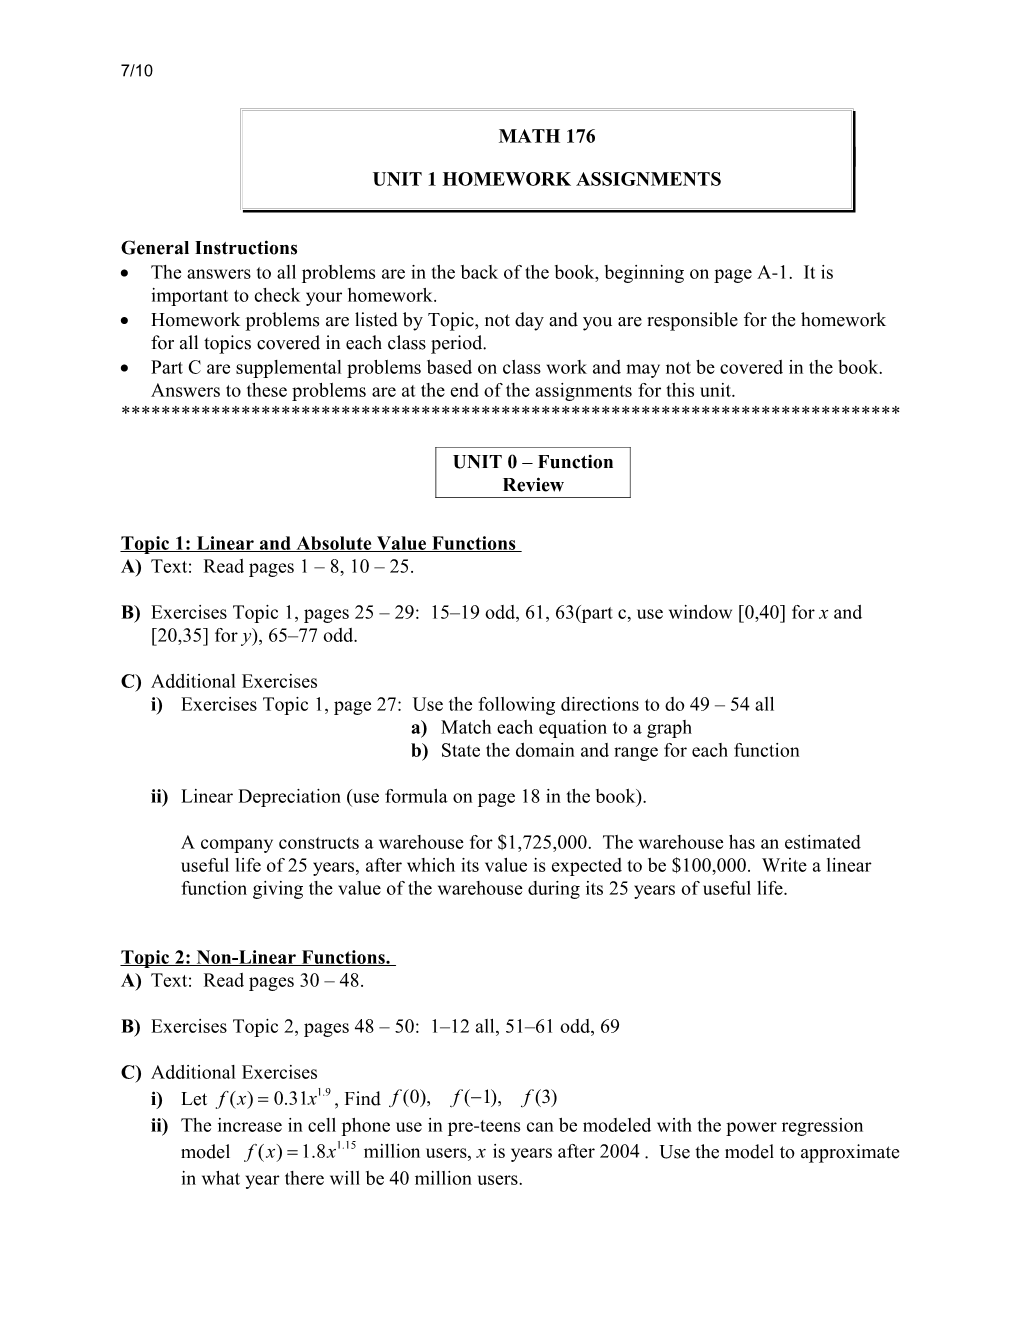 Unit 1 Homework Assignments